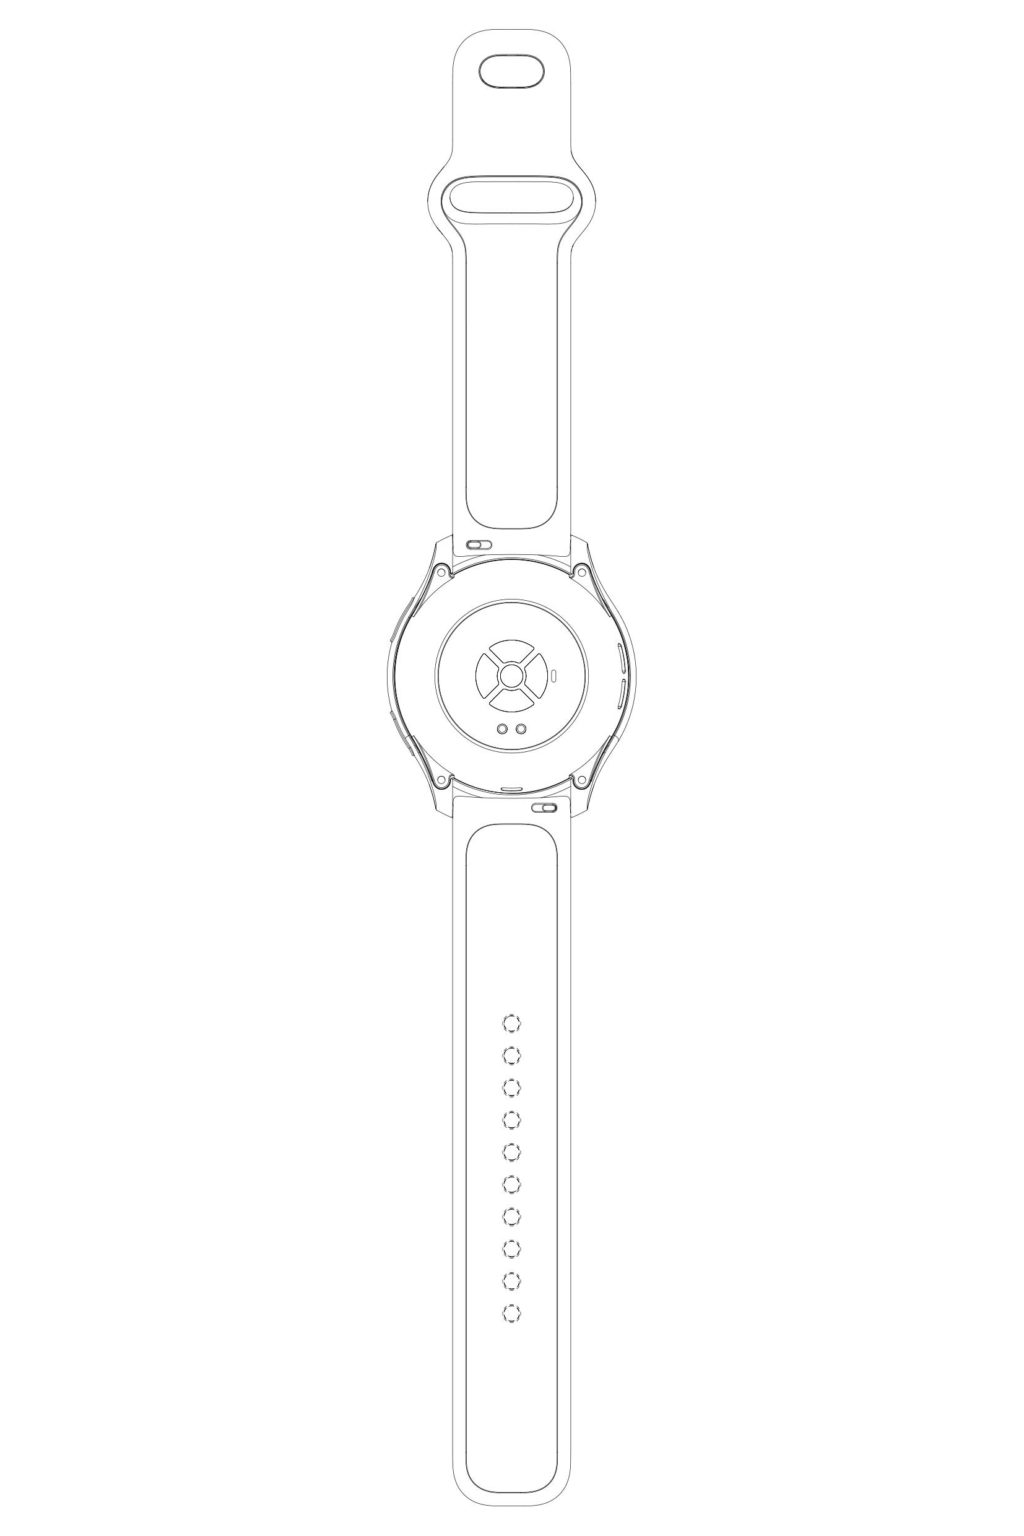 oneplus-watch-sport-patent-5-1024x1536.jpg